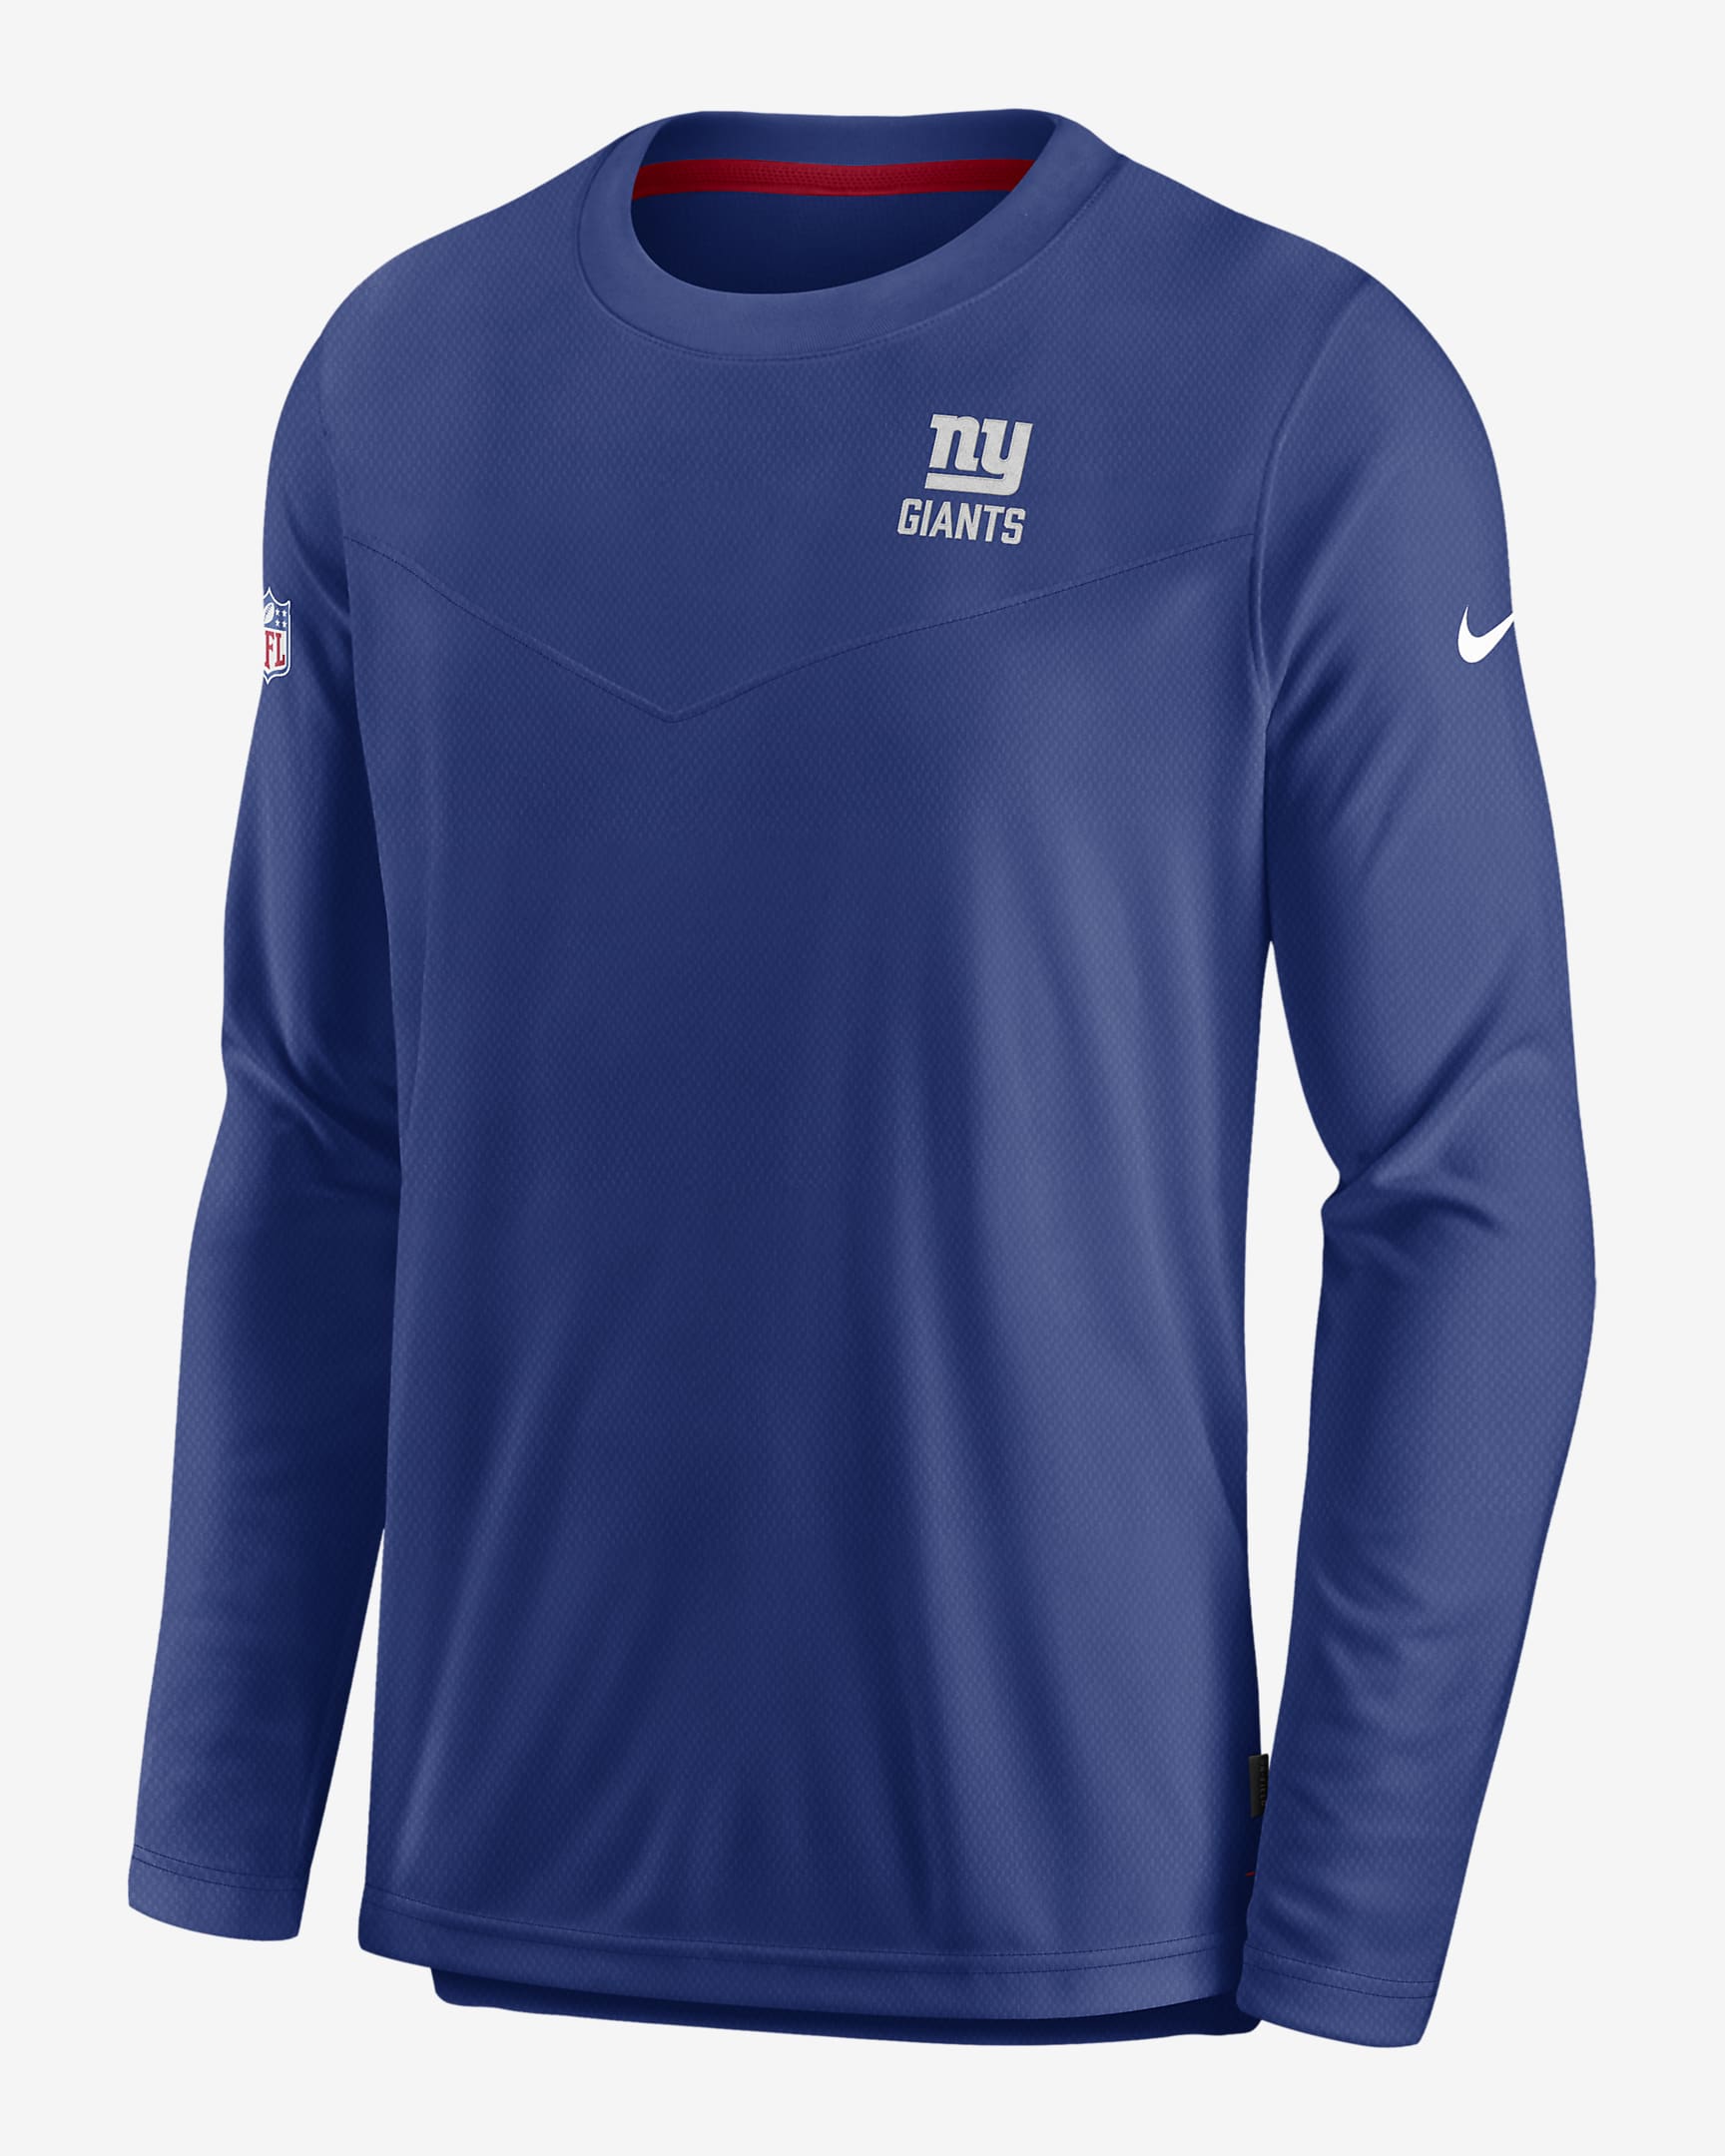 Nike Dri-FIT Lockup (NFL New York Giants) Men's Long-Sleeve Top. Nike.com